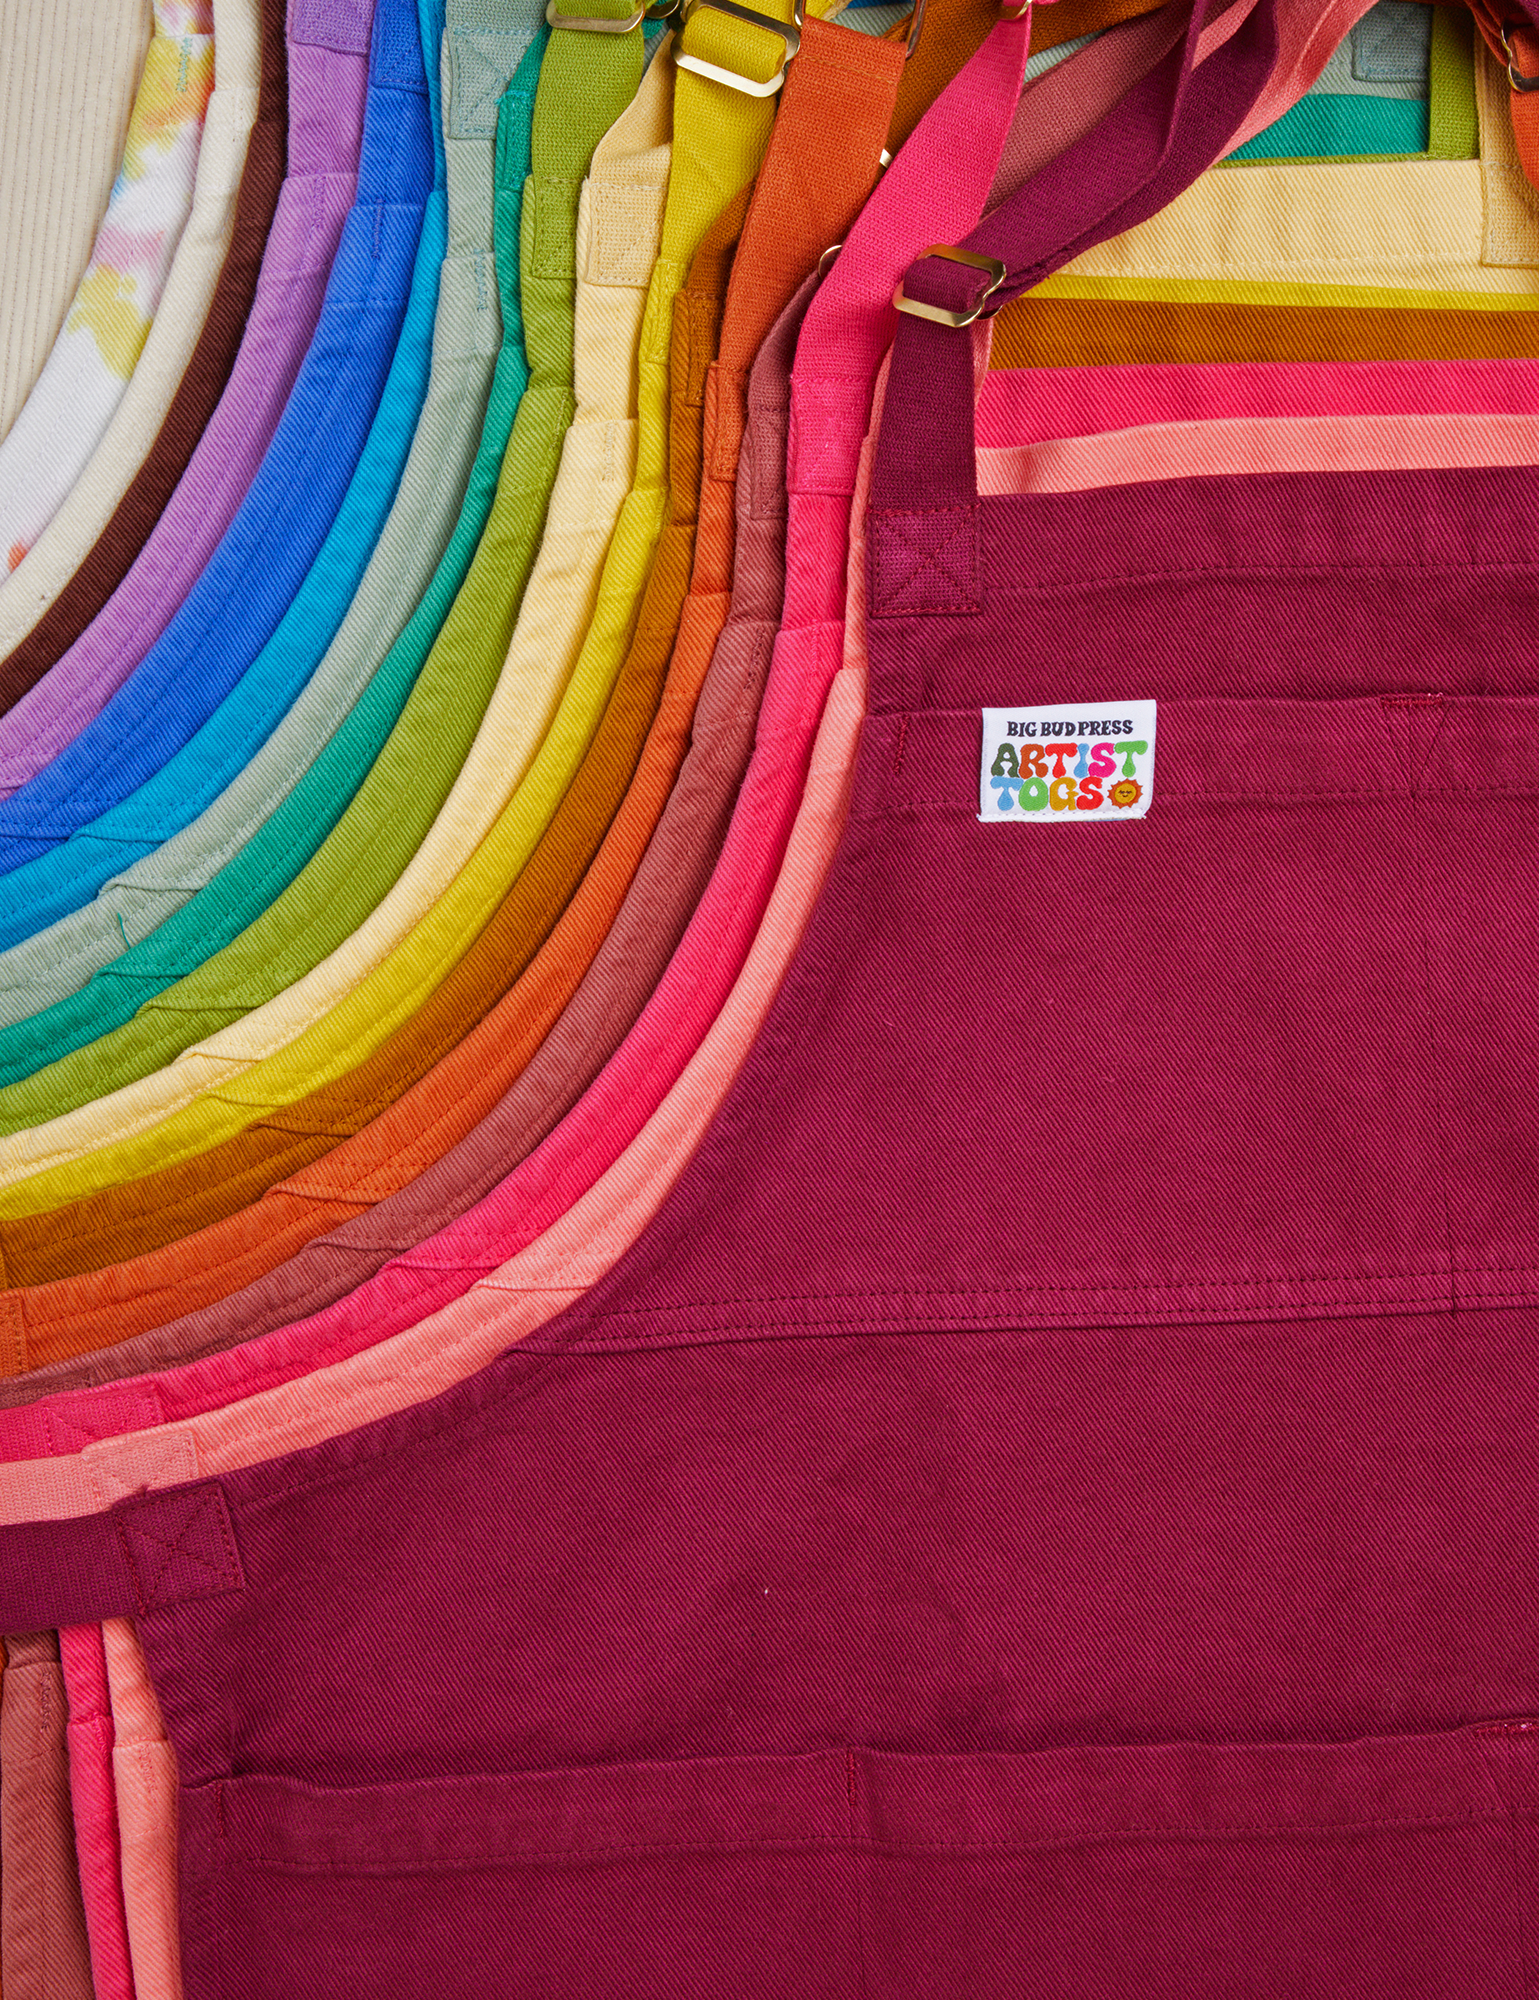 Artist Togs Full Apron - Rainbow Splotch Tie Dye